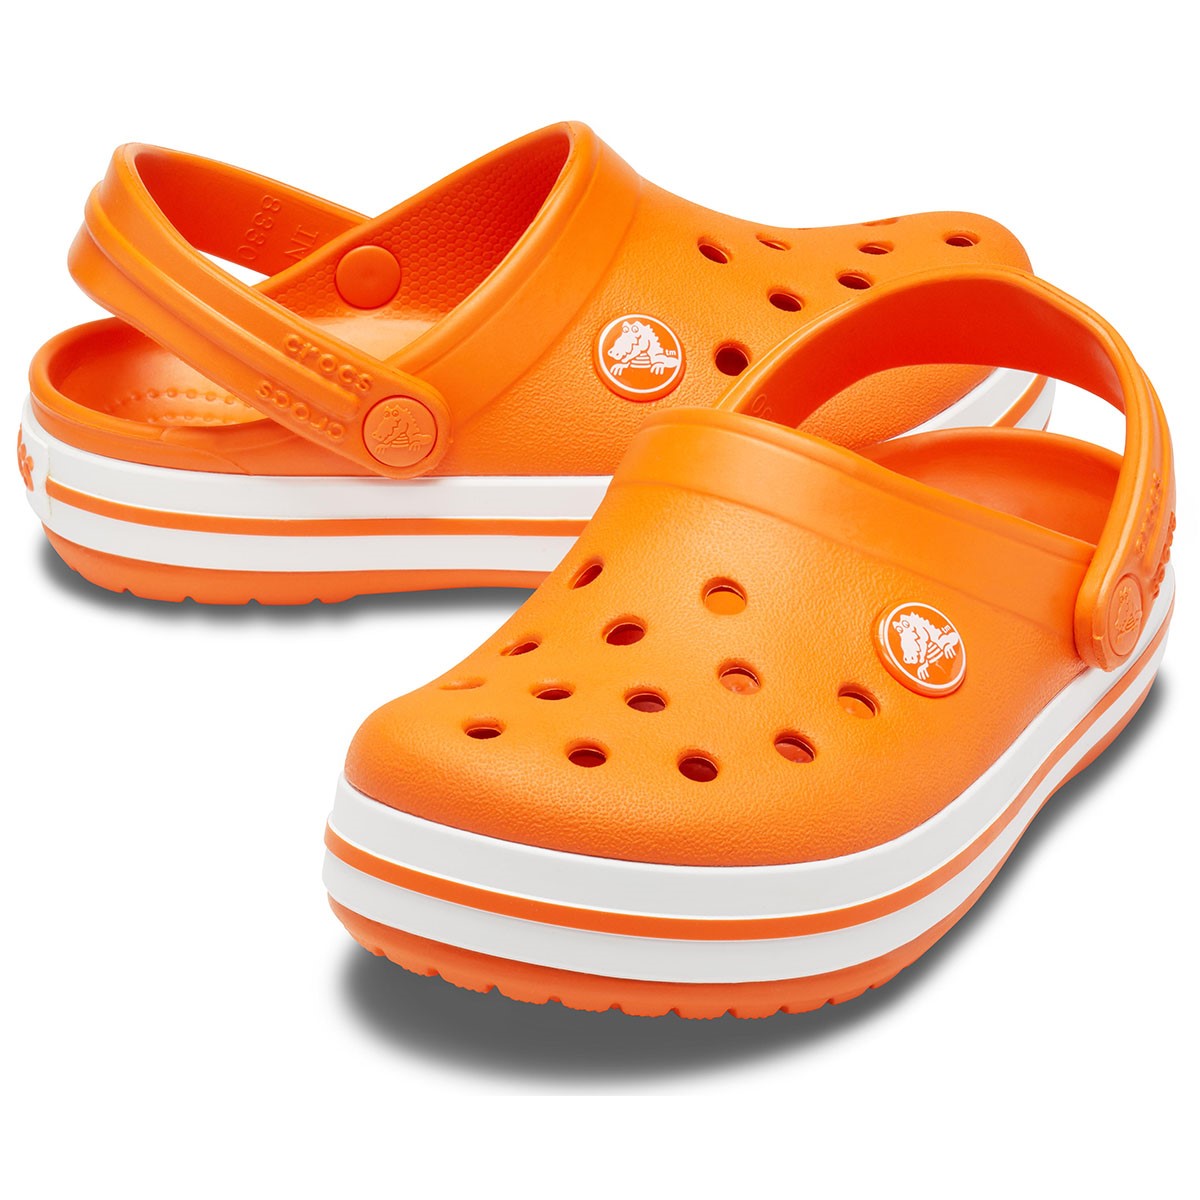 Crocs Sandalet 204537 Orange